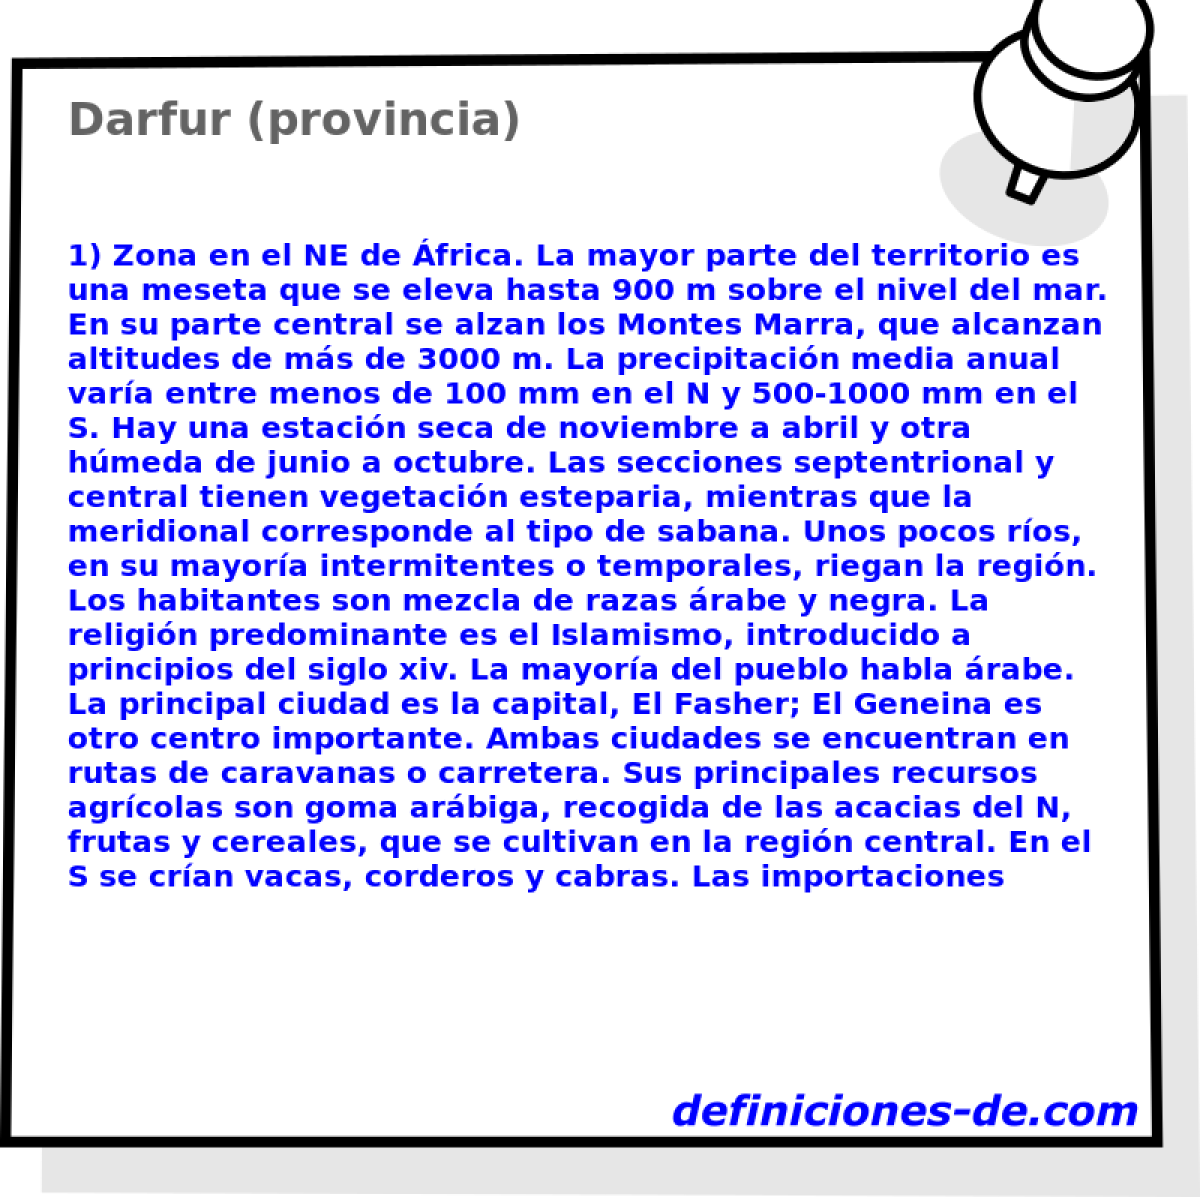 Darfur (provincia) 